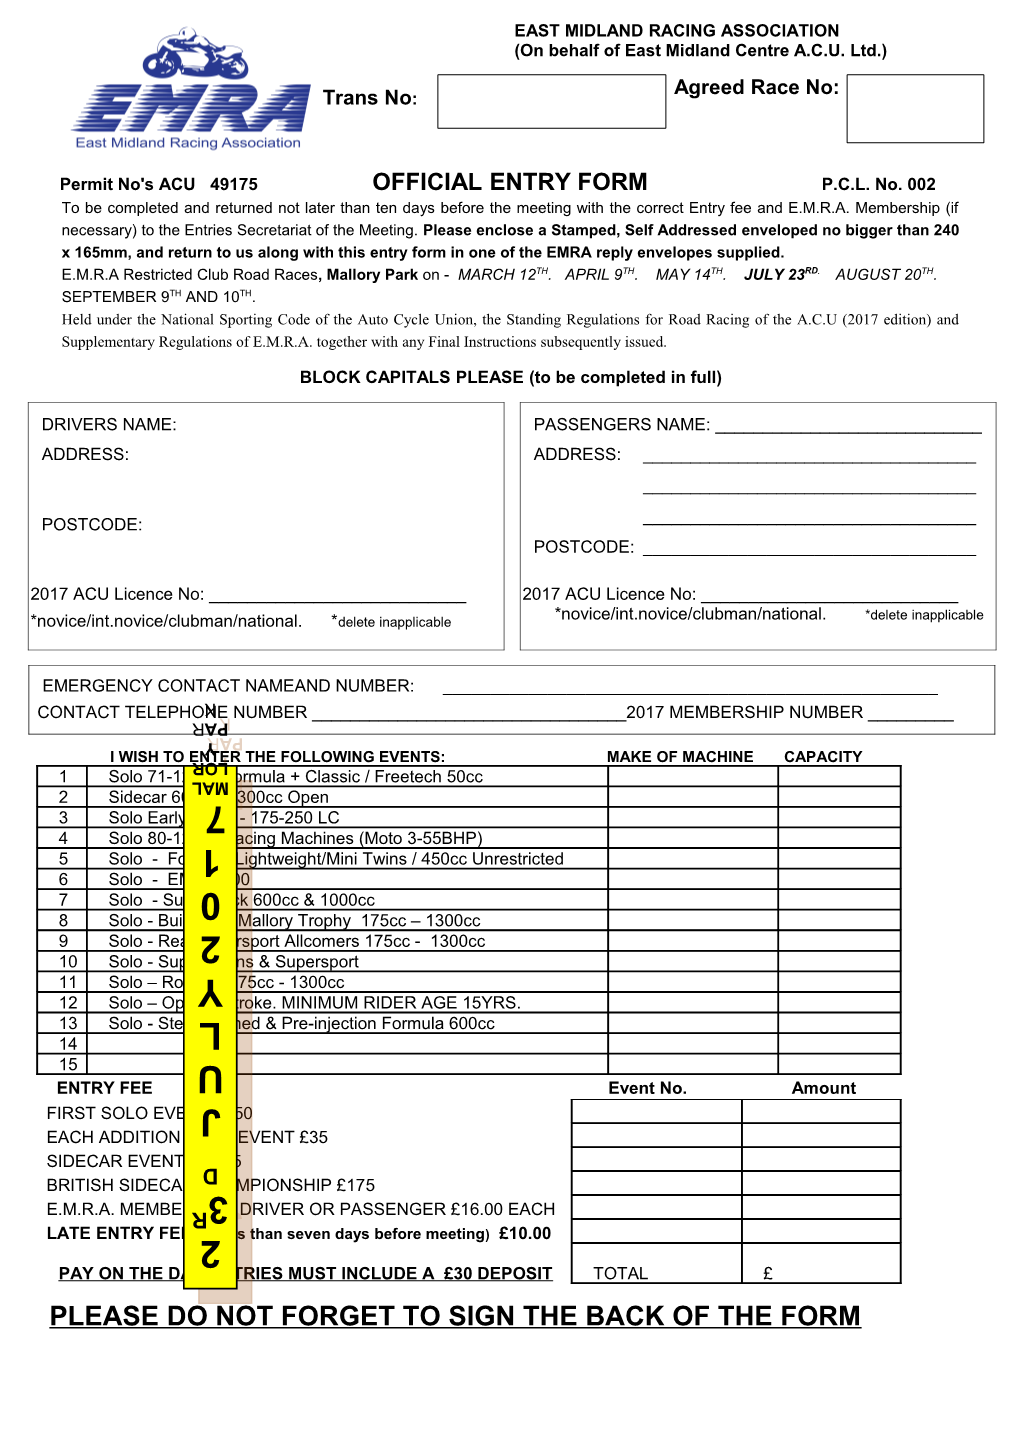 Permit No's ACU 49175 OFFICIAL ENTRY FORM P.C.L. No. 002